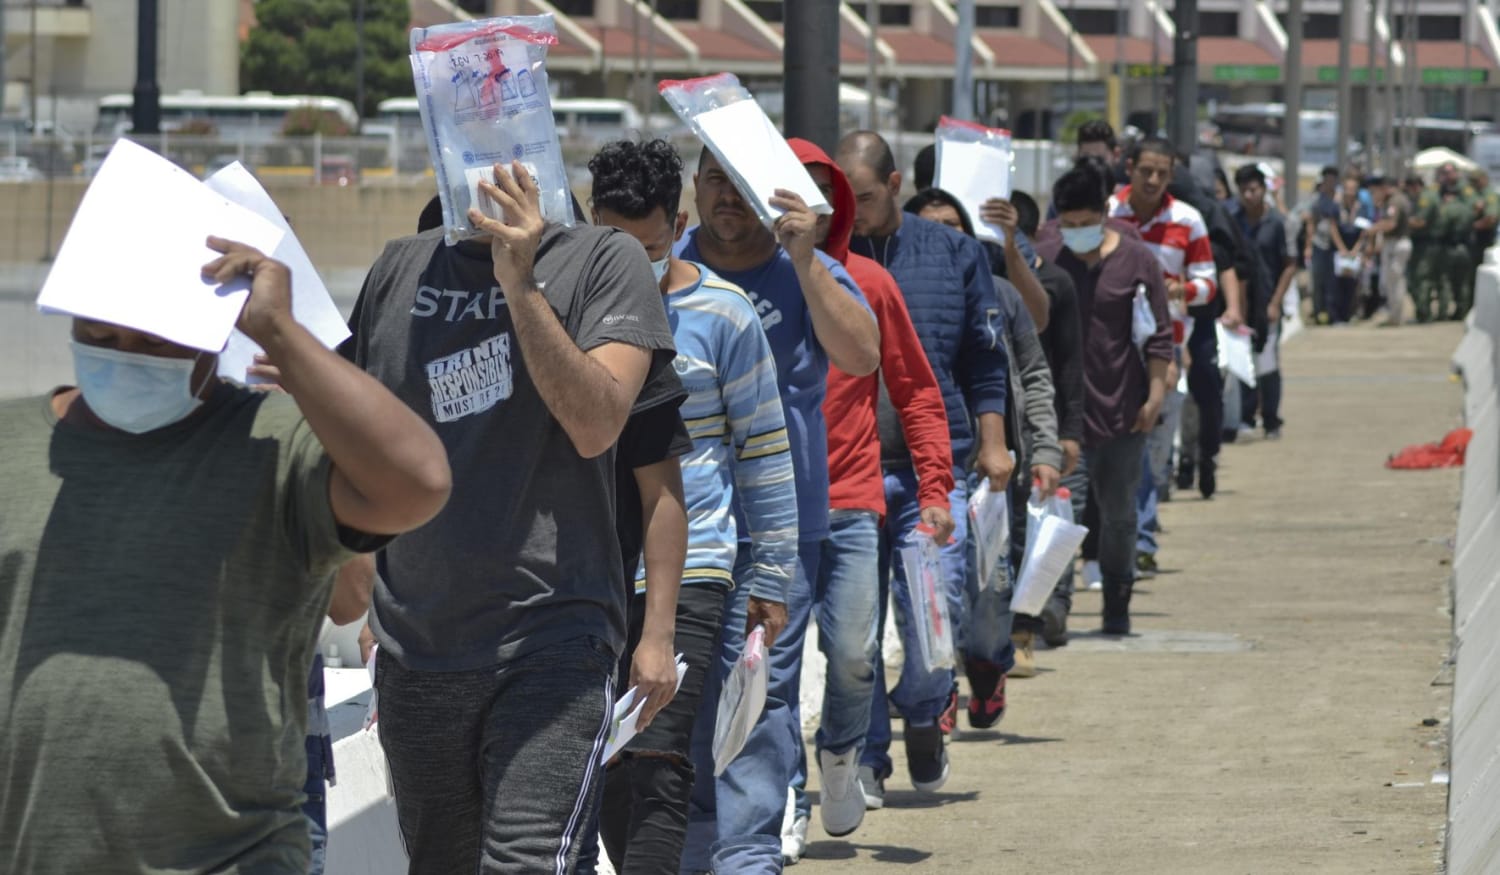 DHS officials fear illegal border crossings may spread coronavirus